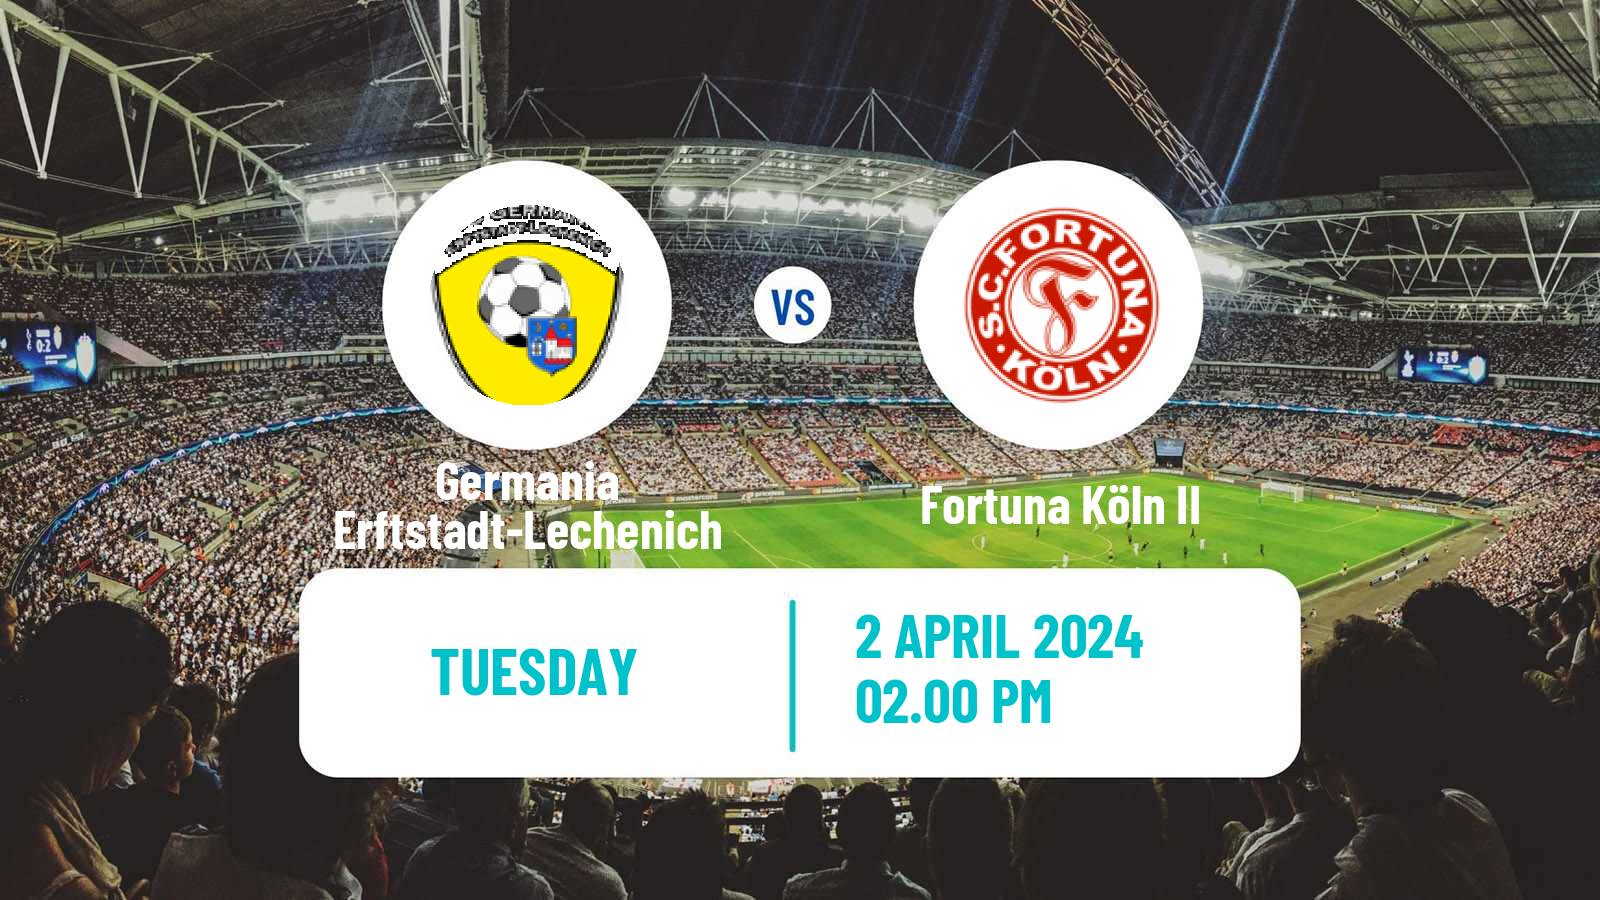 Soccer Club Friendly Germania Erftstadt-Lechenich - Fortuna Köln II